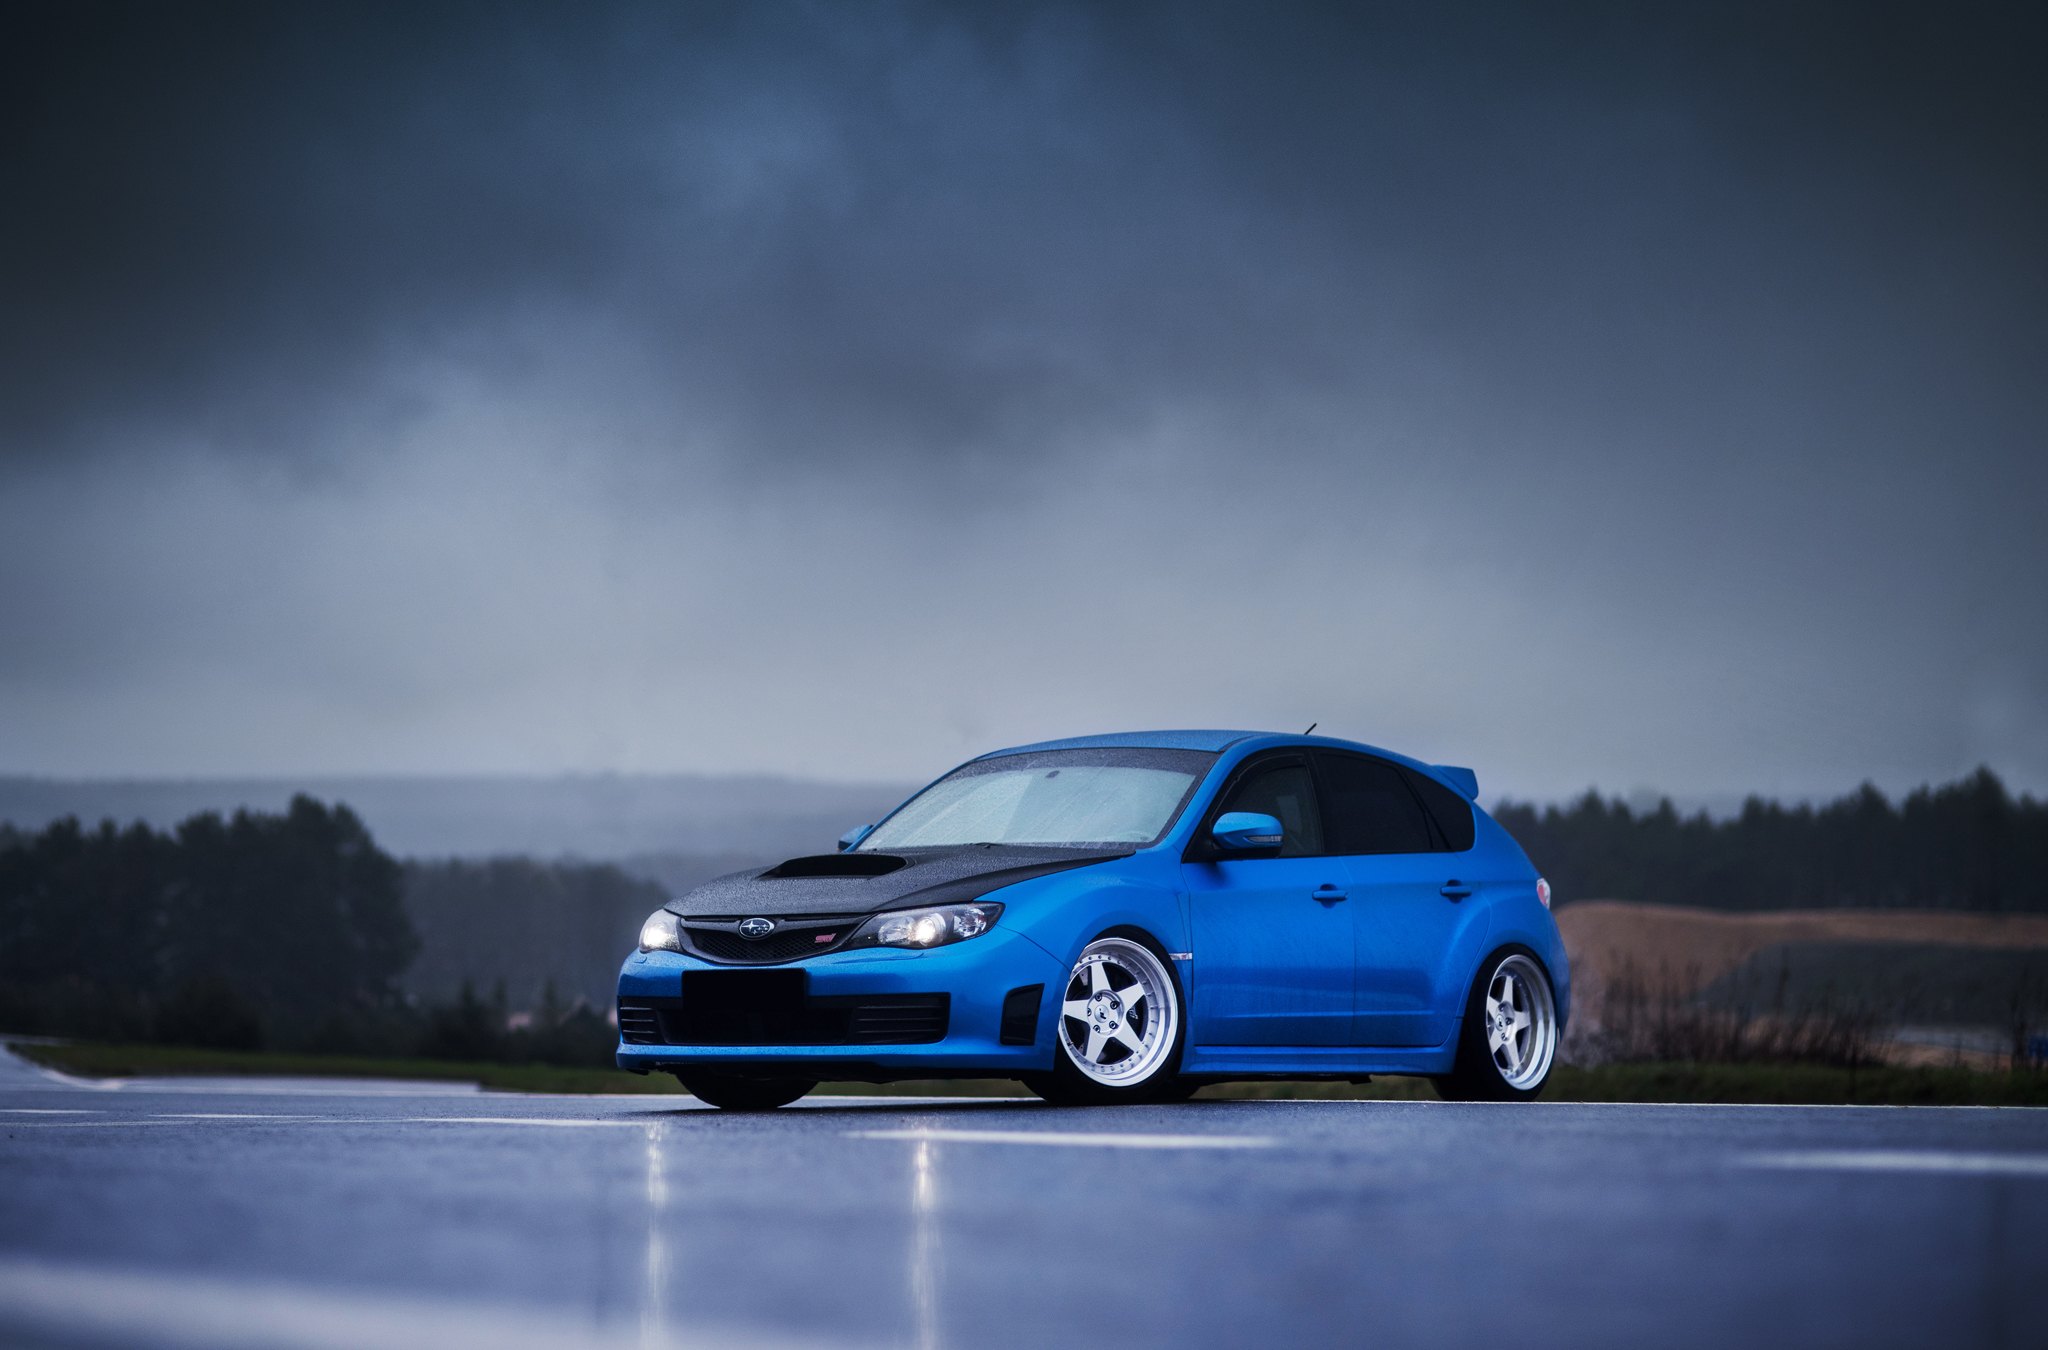 Custom Hood with Air Vent on Blue Subaru Impreza - Photo by JR Wheels